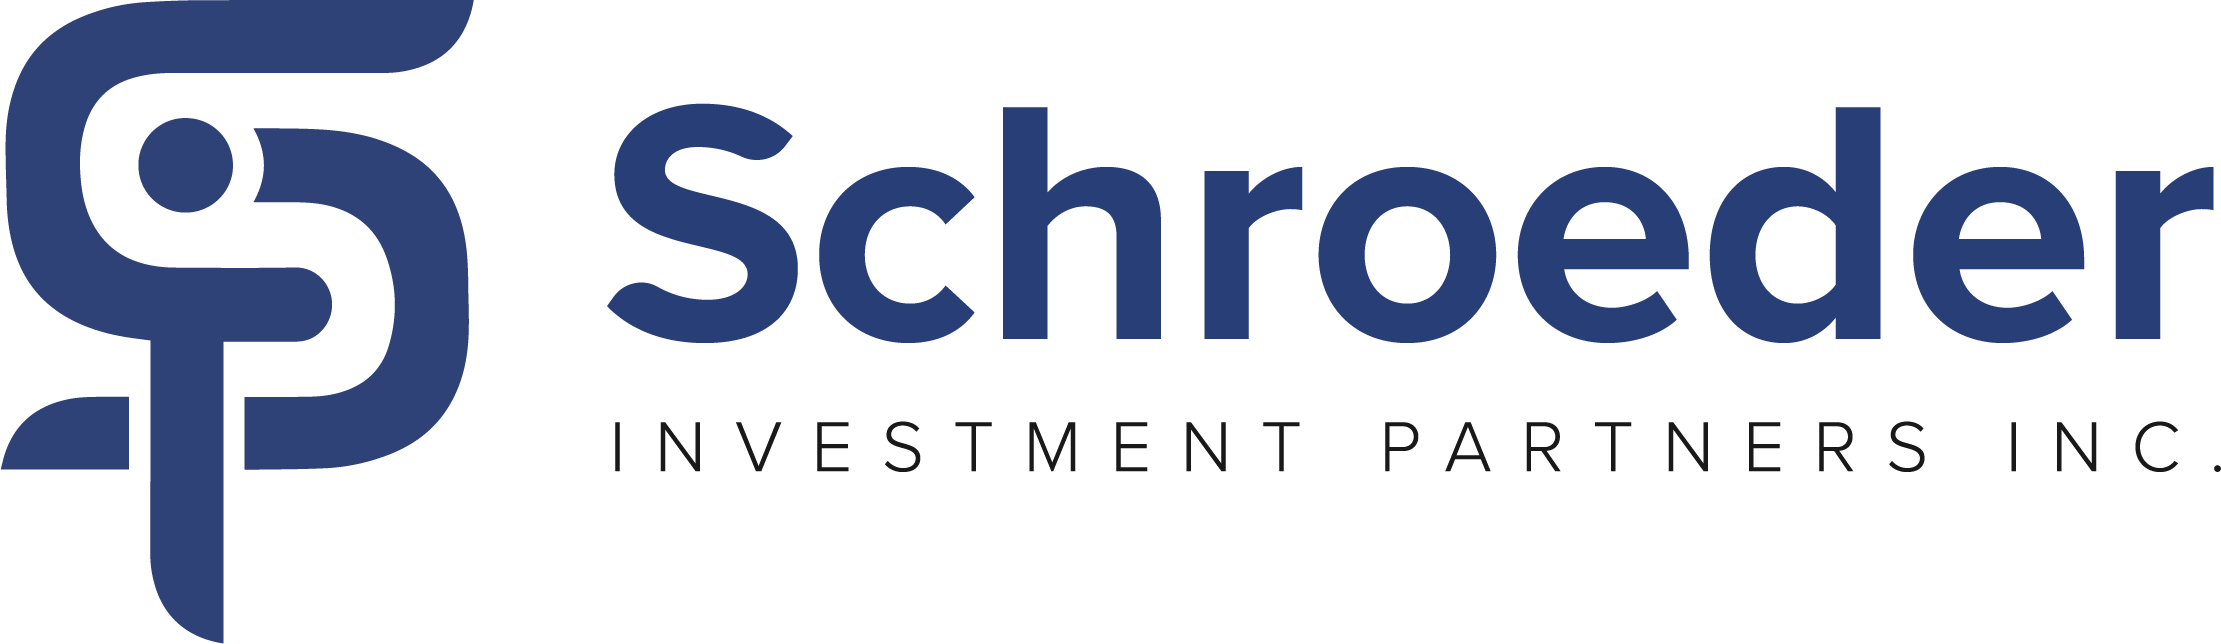 Schroeder Investment Partners Inc.